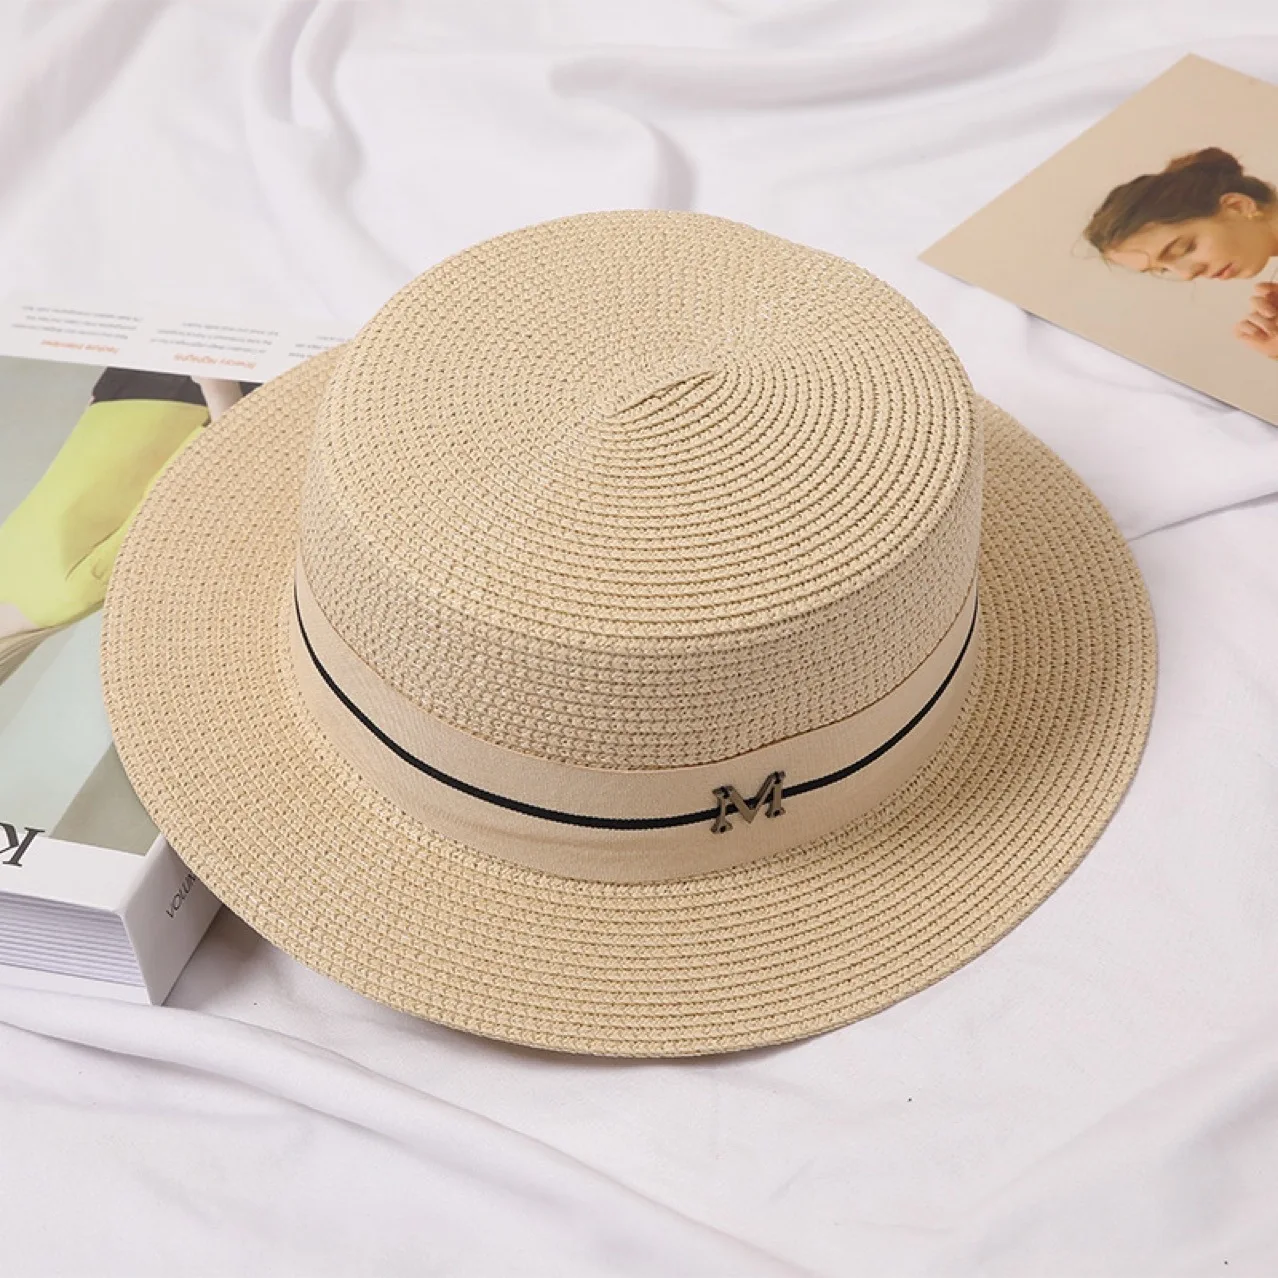 New Summer Straw Hats Woman Panama Travel Beach Sun Hat Women Elegant Luxury Jazz Hat